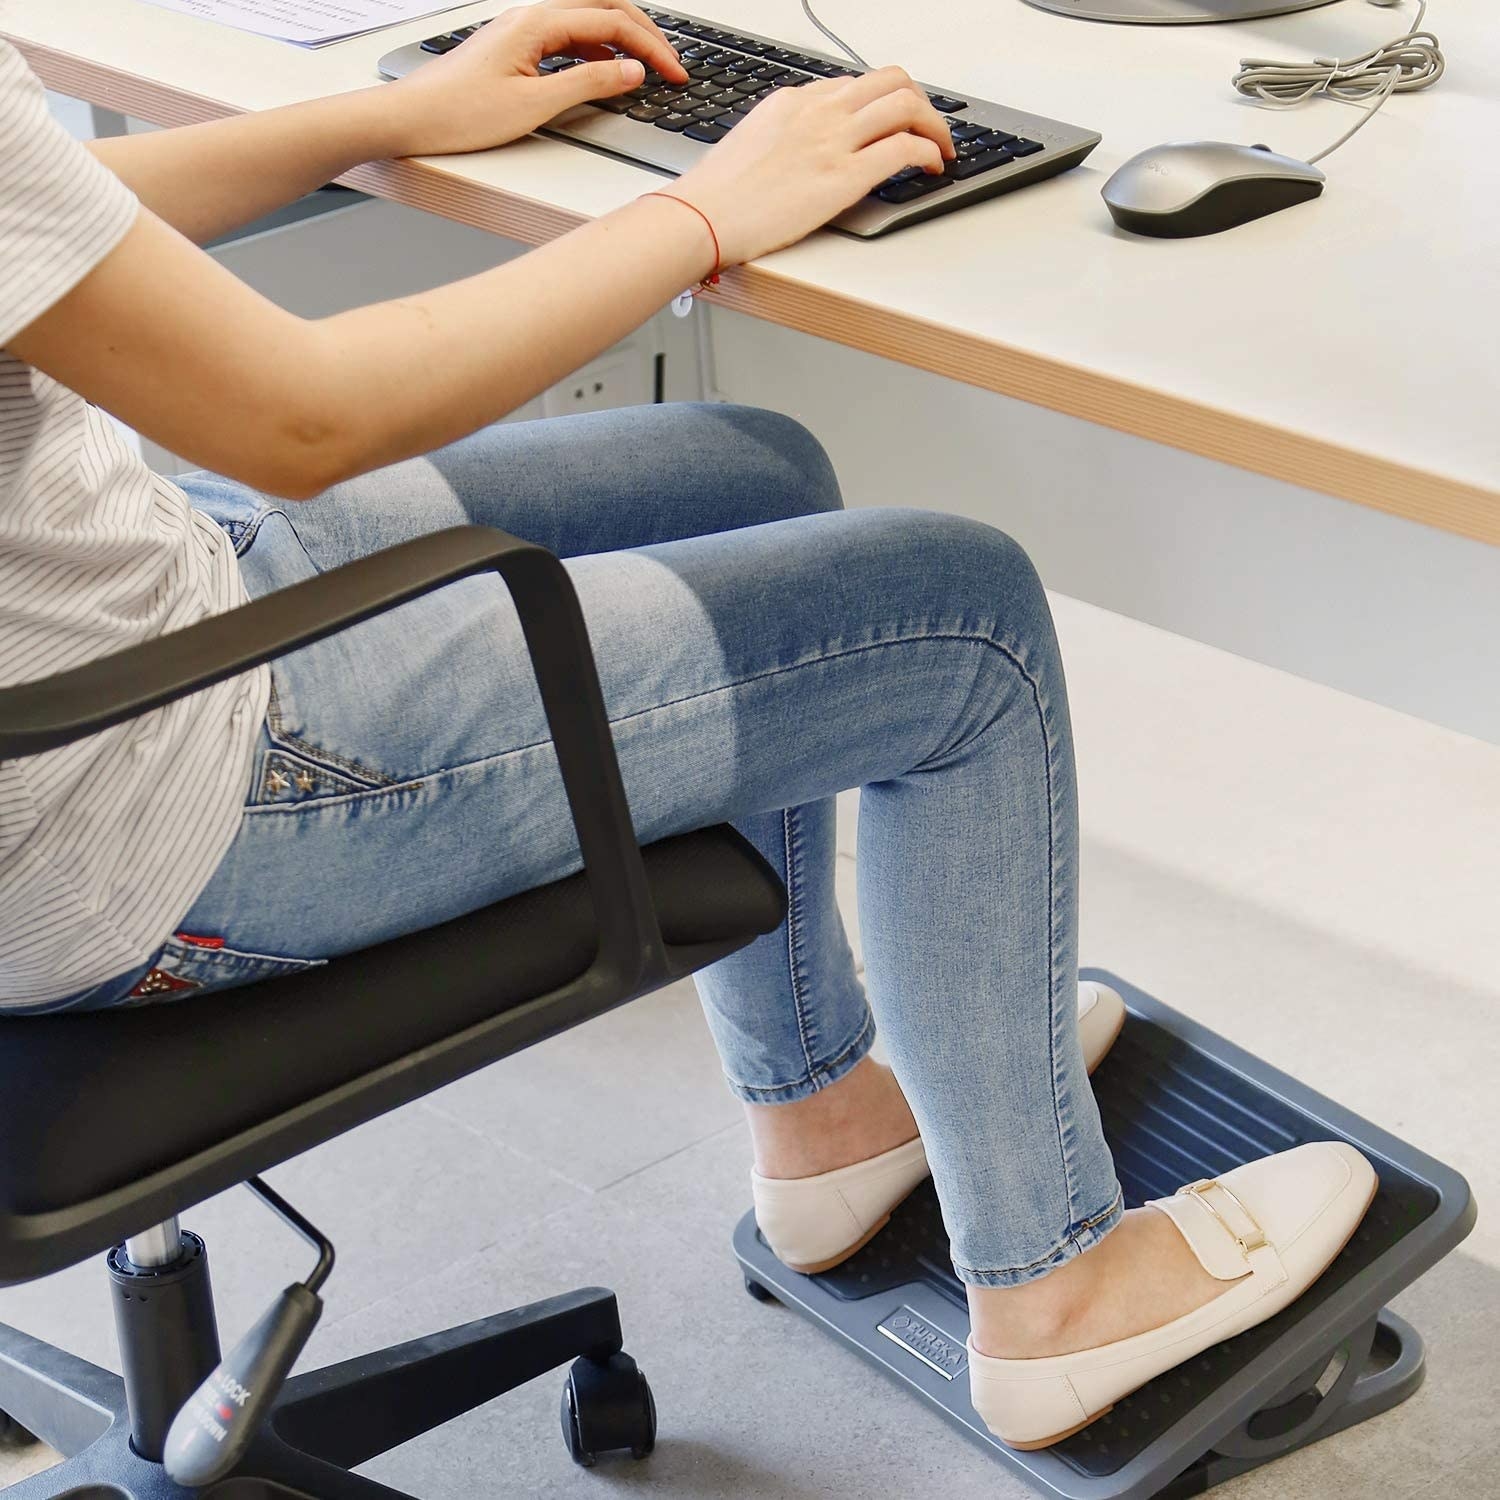 Details about   Comforthr Foot Rest Under Desk Home & Office Essential Stool Footrest Pain 